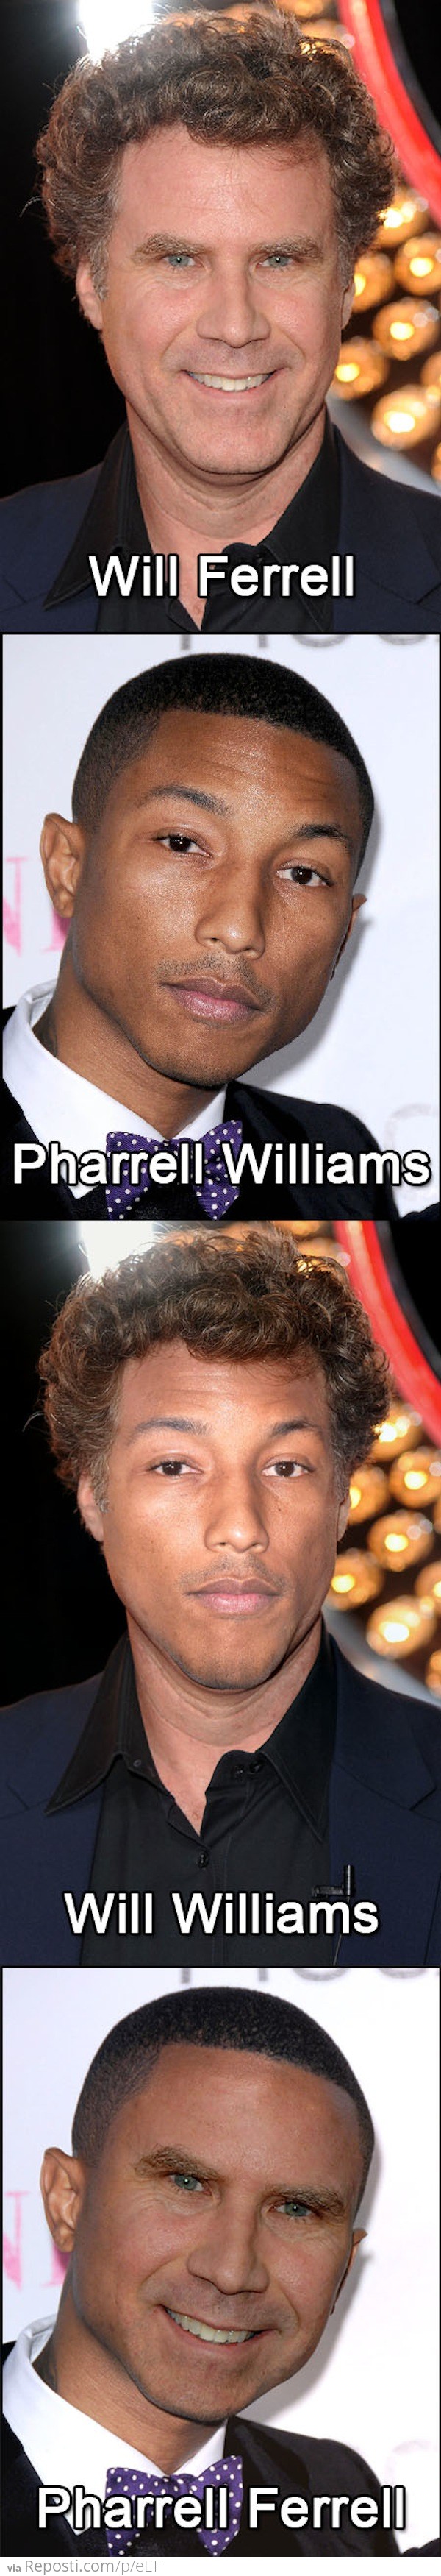 Will Ferrell + Pharrell Wiliams